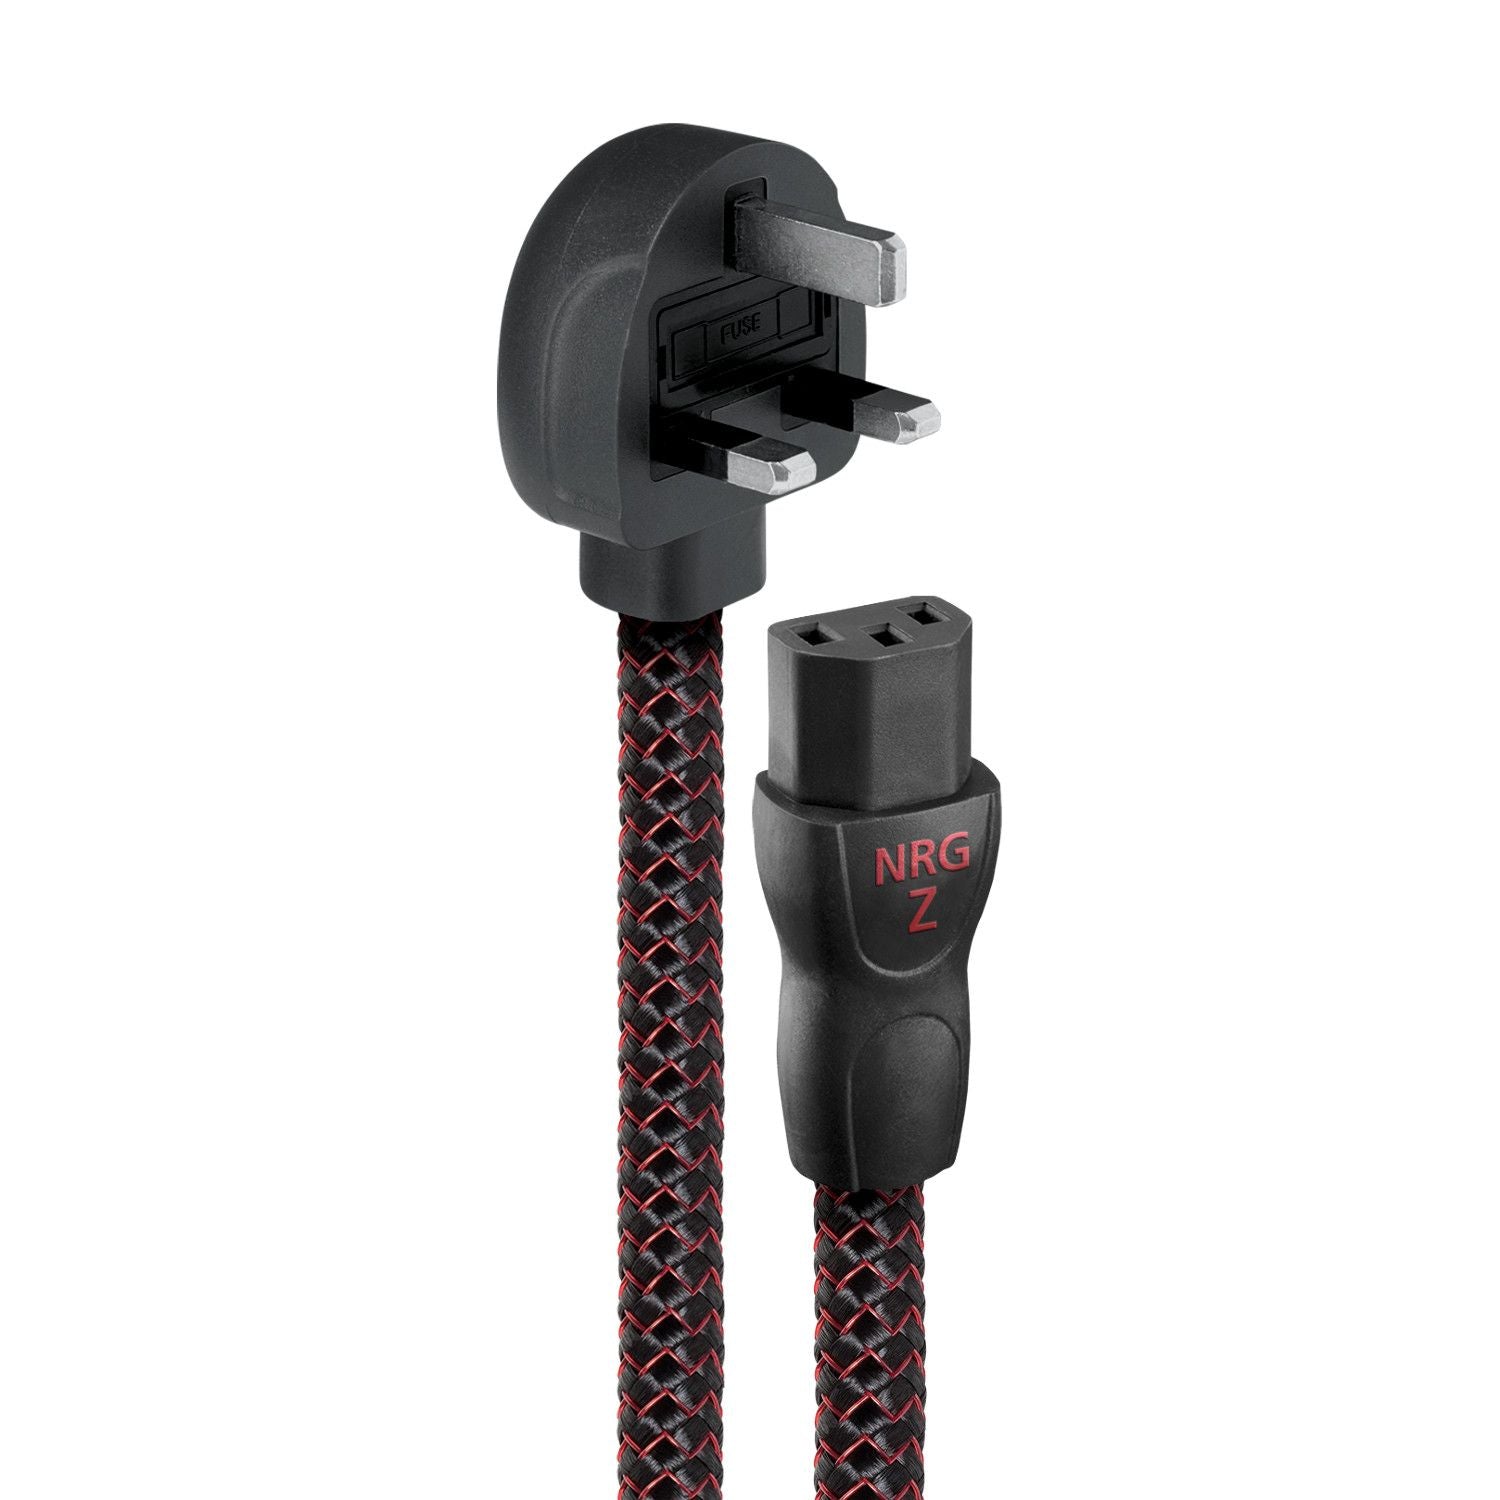 NRG-Z3 power cord (UK Edition)